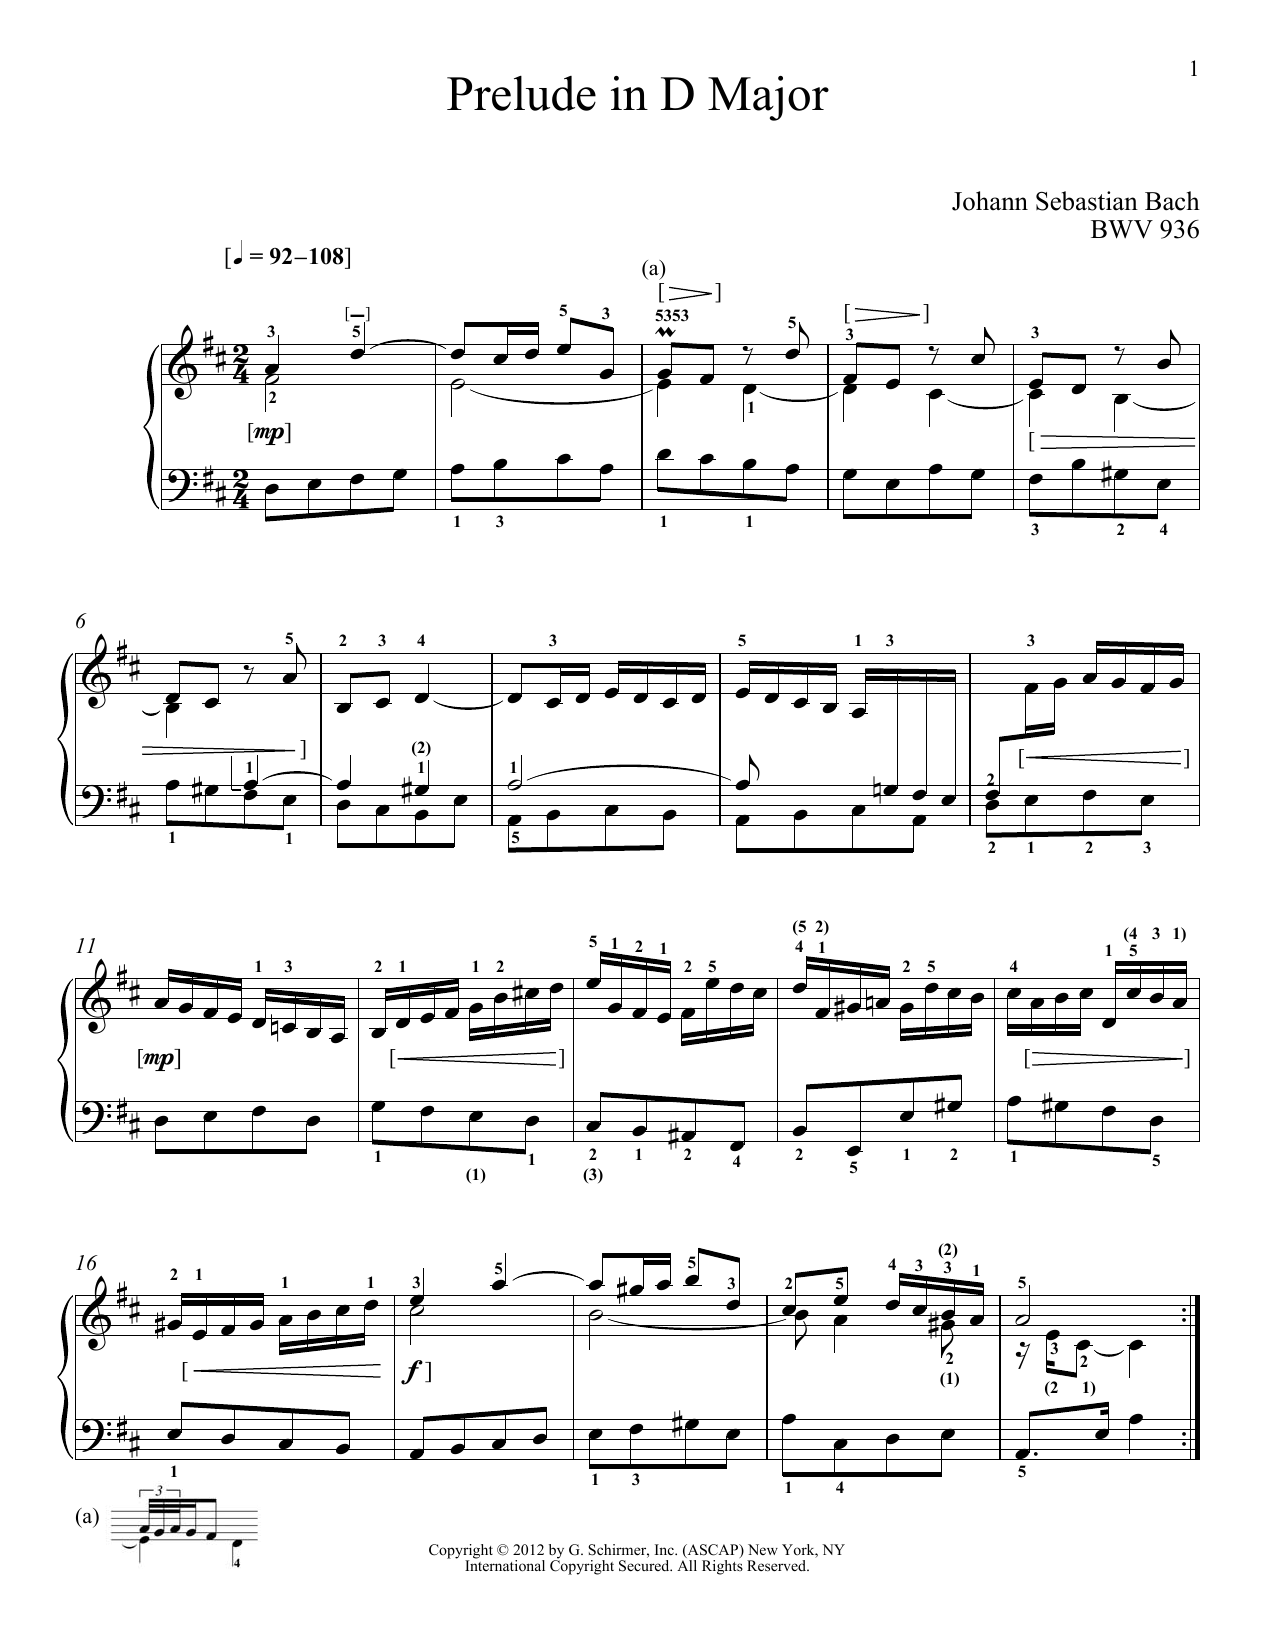 Johann Sebastian Bach Prelude In D Major, BMV 936 Sheet Music Notes & Chords for Piano - Download or Print PDF